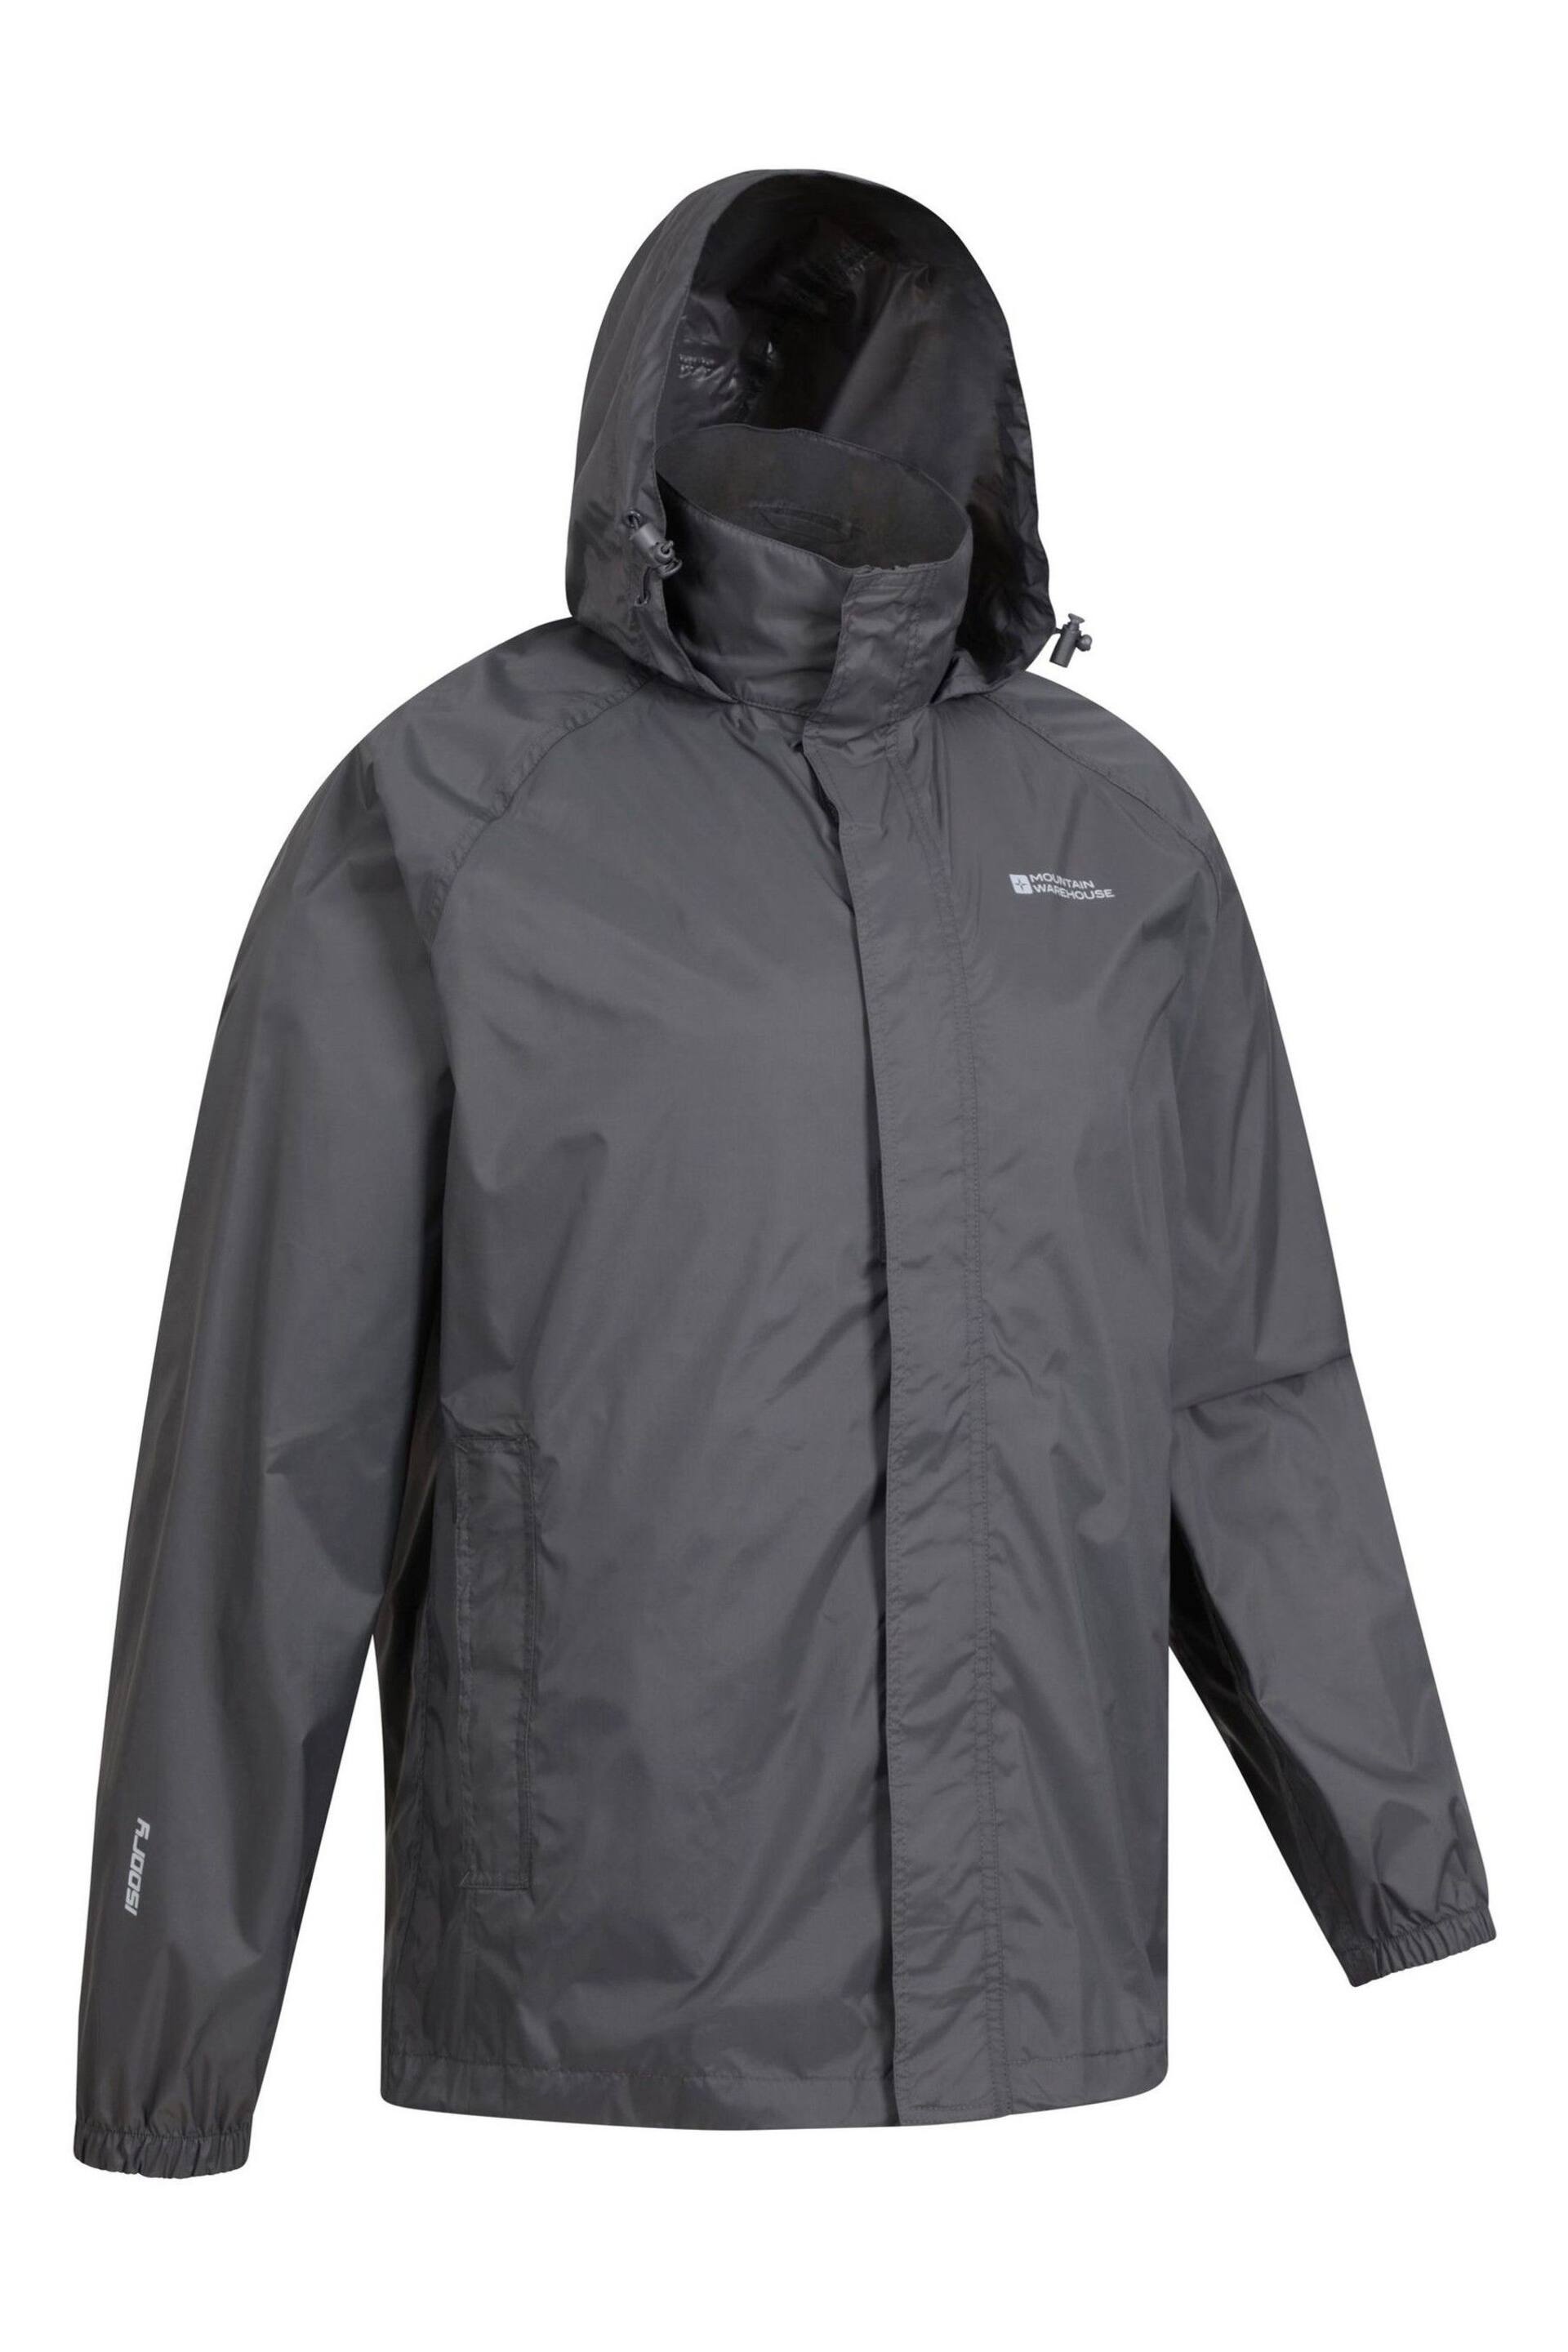 Mountain Warehouse Grey Pakka Waterproof Jacket - Mens - Image 2 of 5